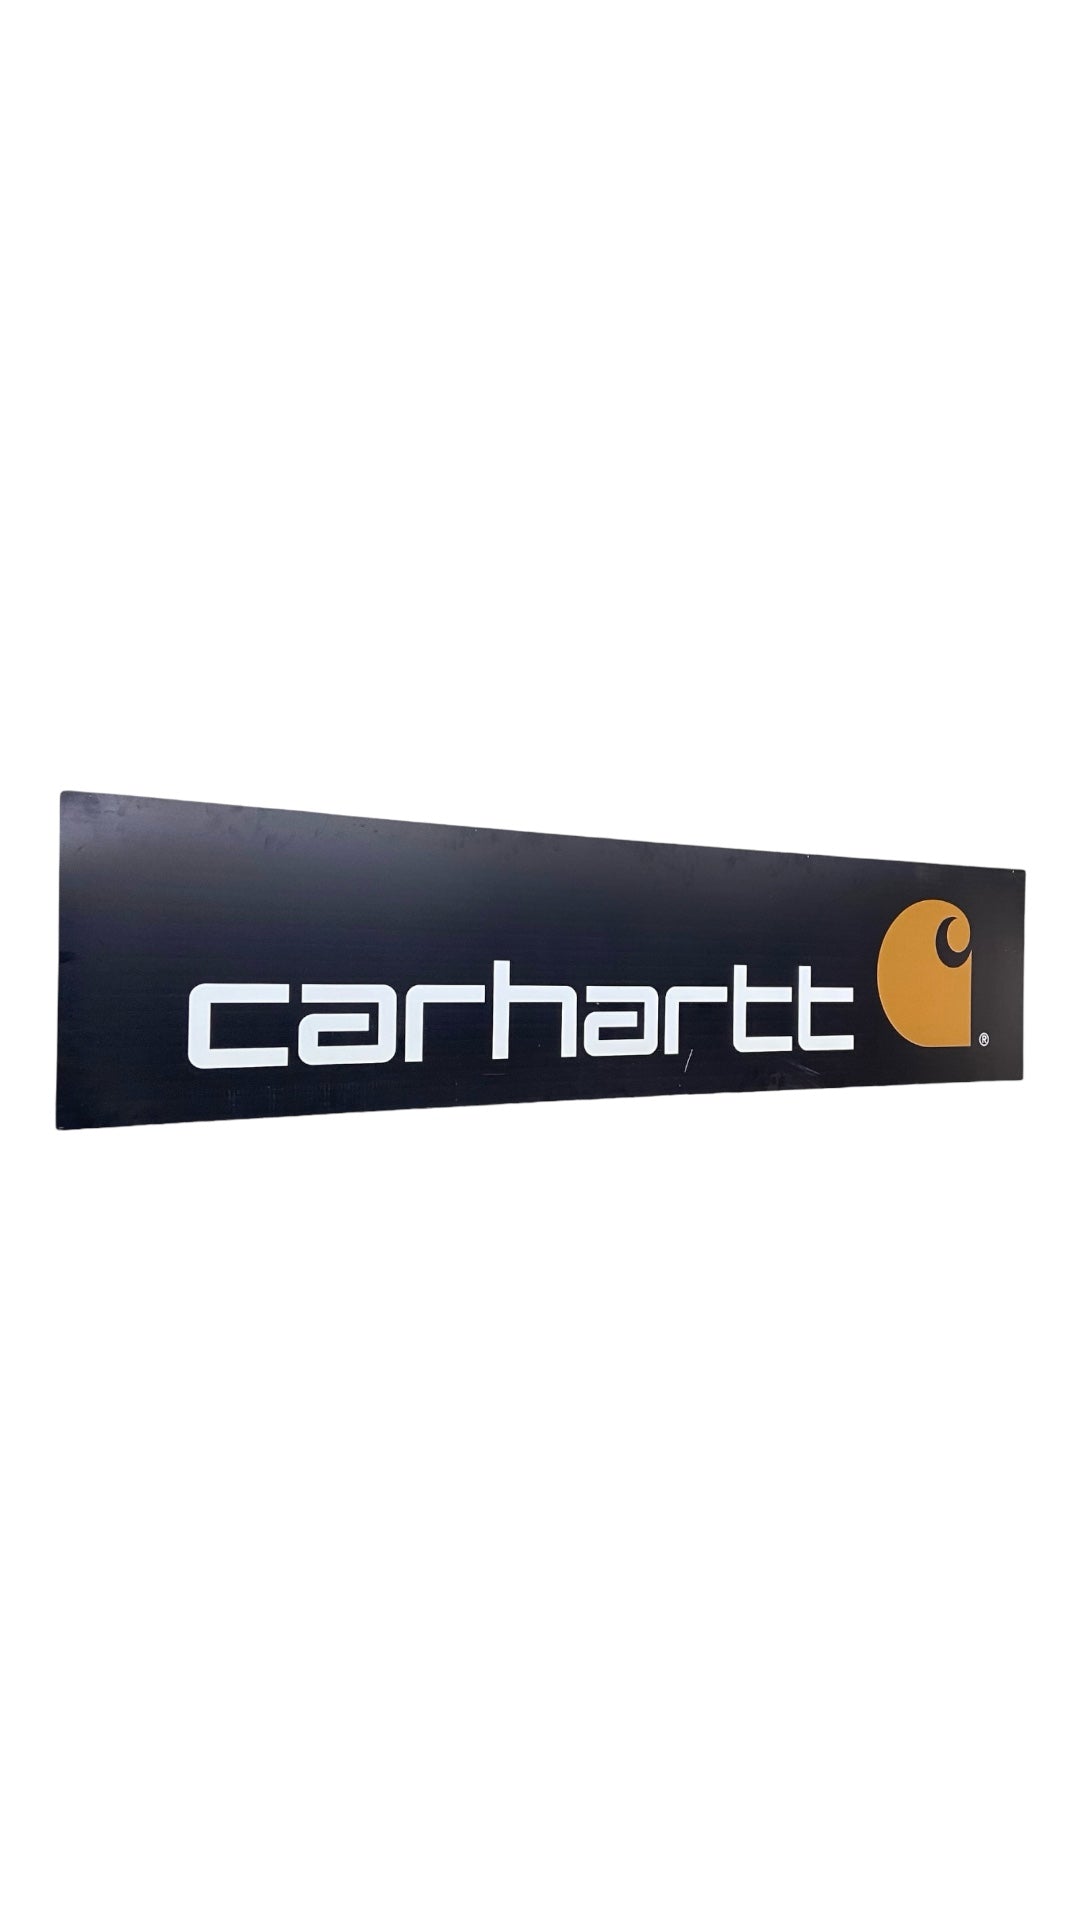 Carhartt Horizontal Store Display Sign 8ftx2ft